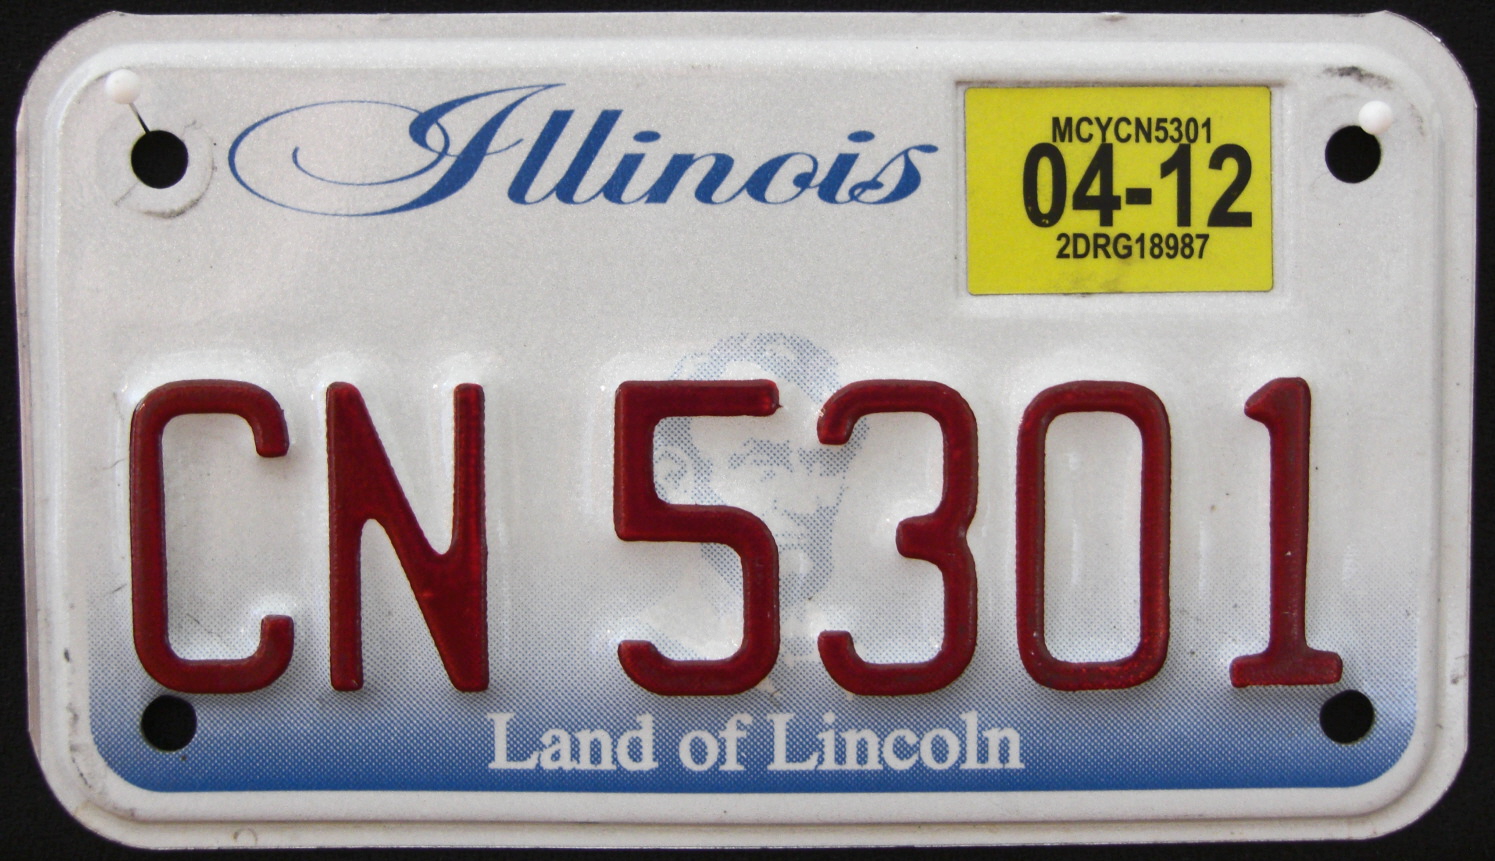 license plate sticker renewal illinois near me